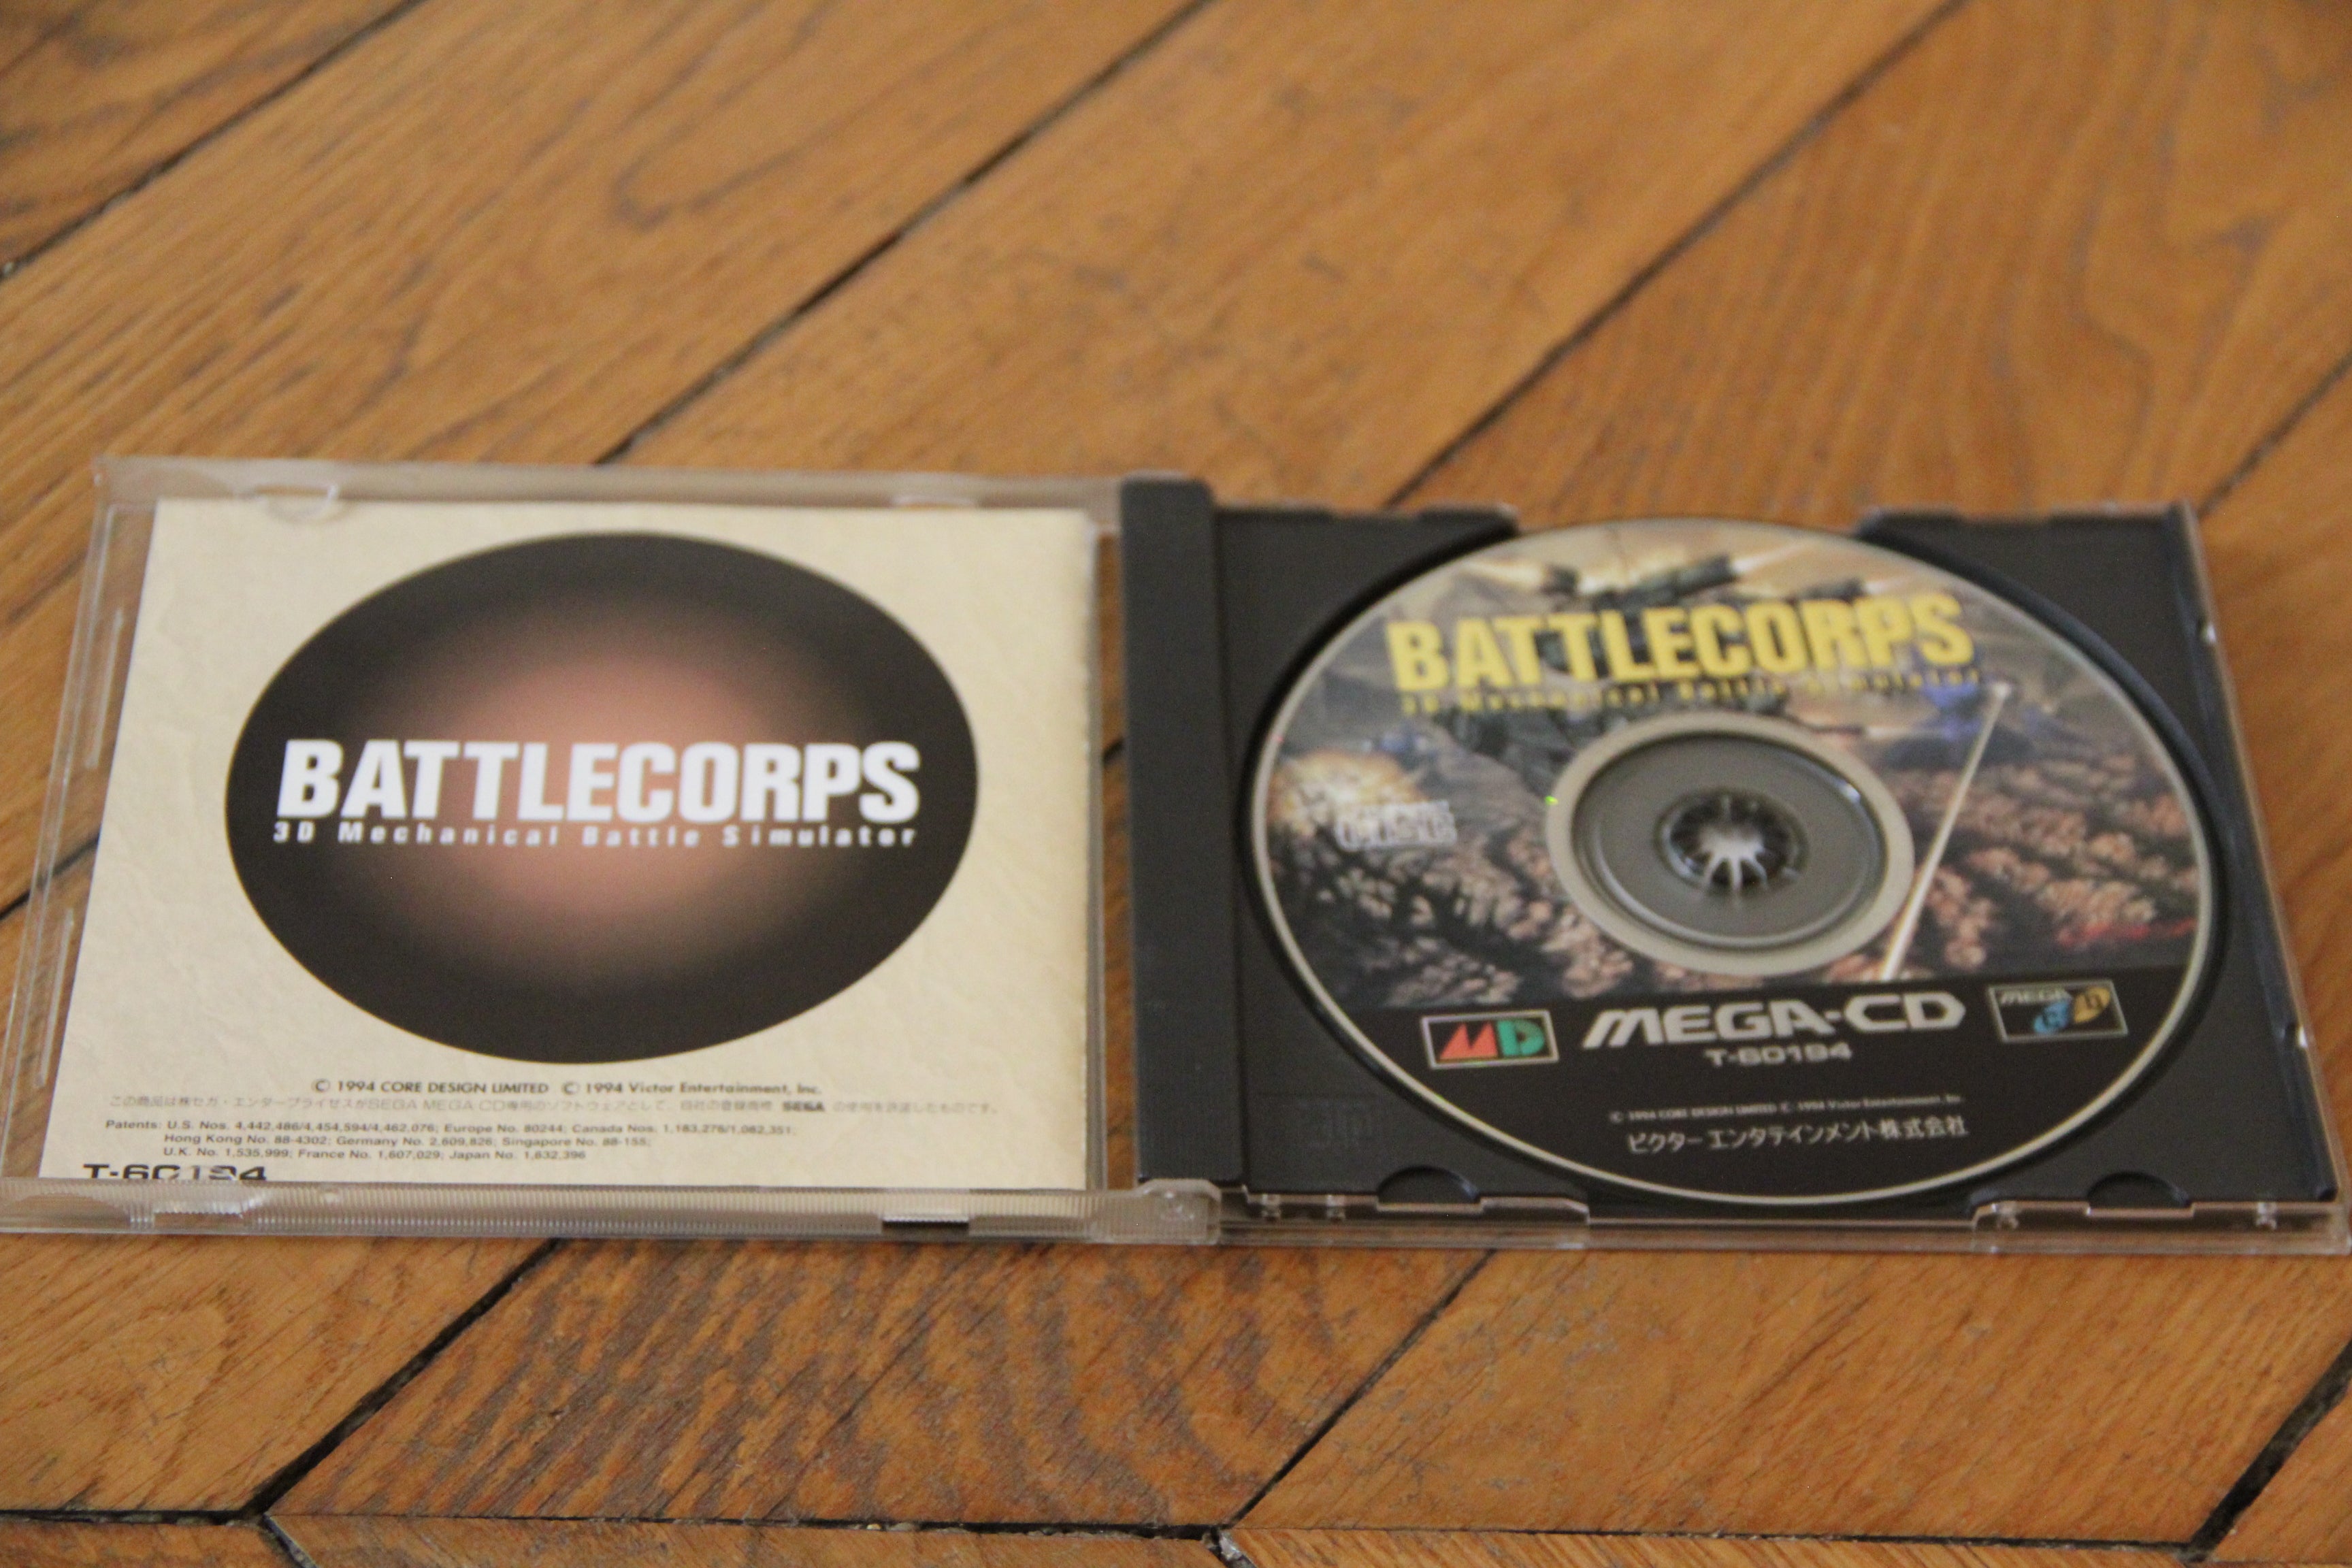 Battlecorps 3D Mechanical Mega CD Sega Megadrive Games Japan T-60194 Boxed